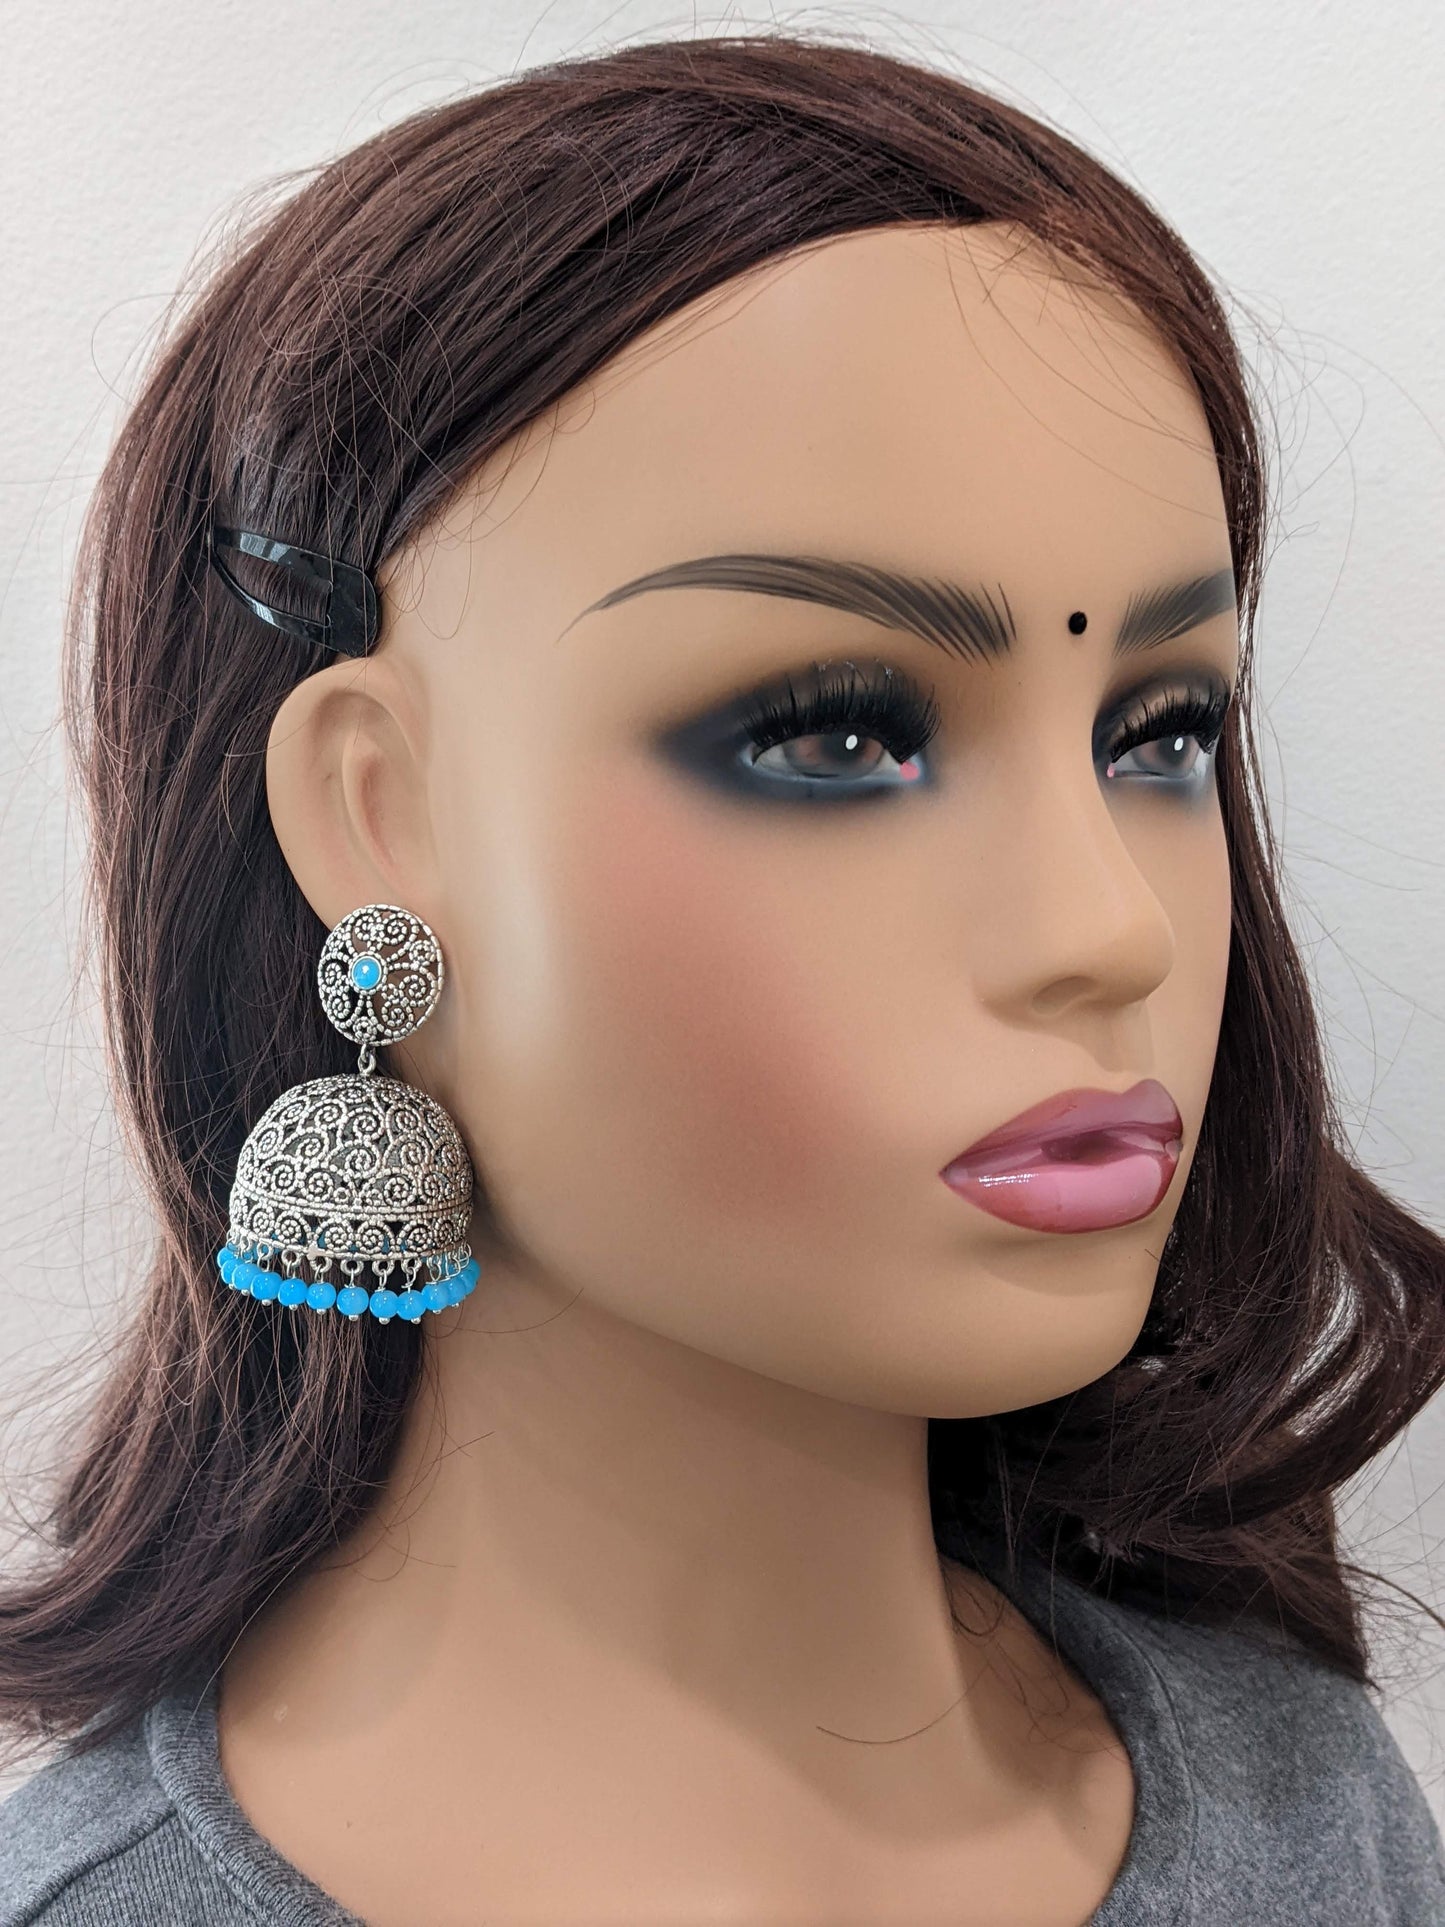 XXL size filigree rhodium silver jhumka earrings